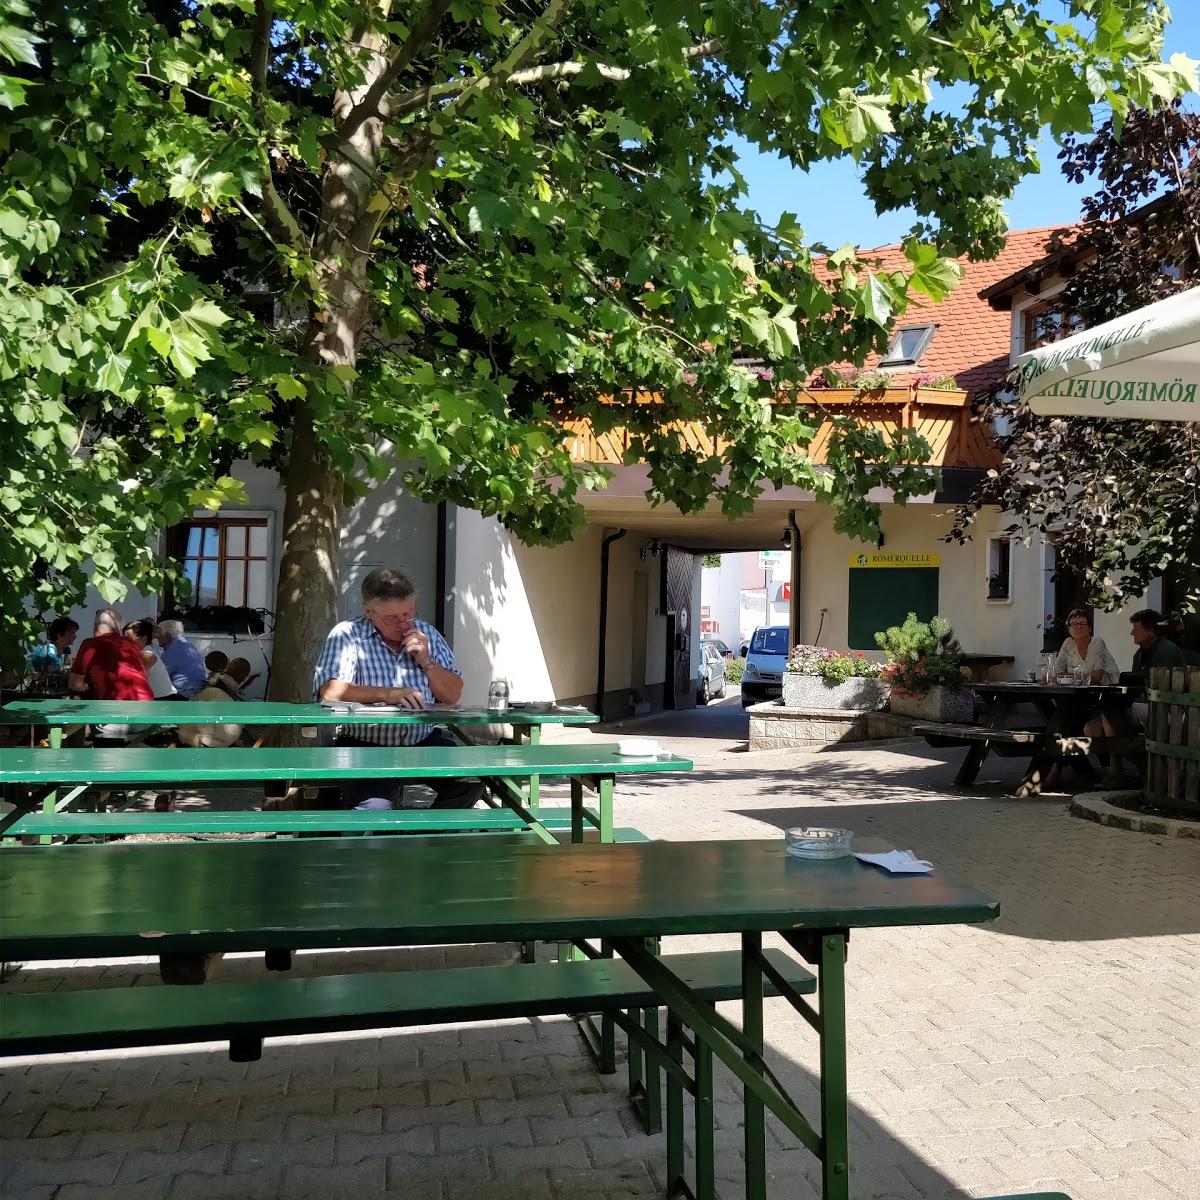 Restaurant "Weinwerkstatt Beranek" in Brunn am Gebirge